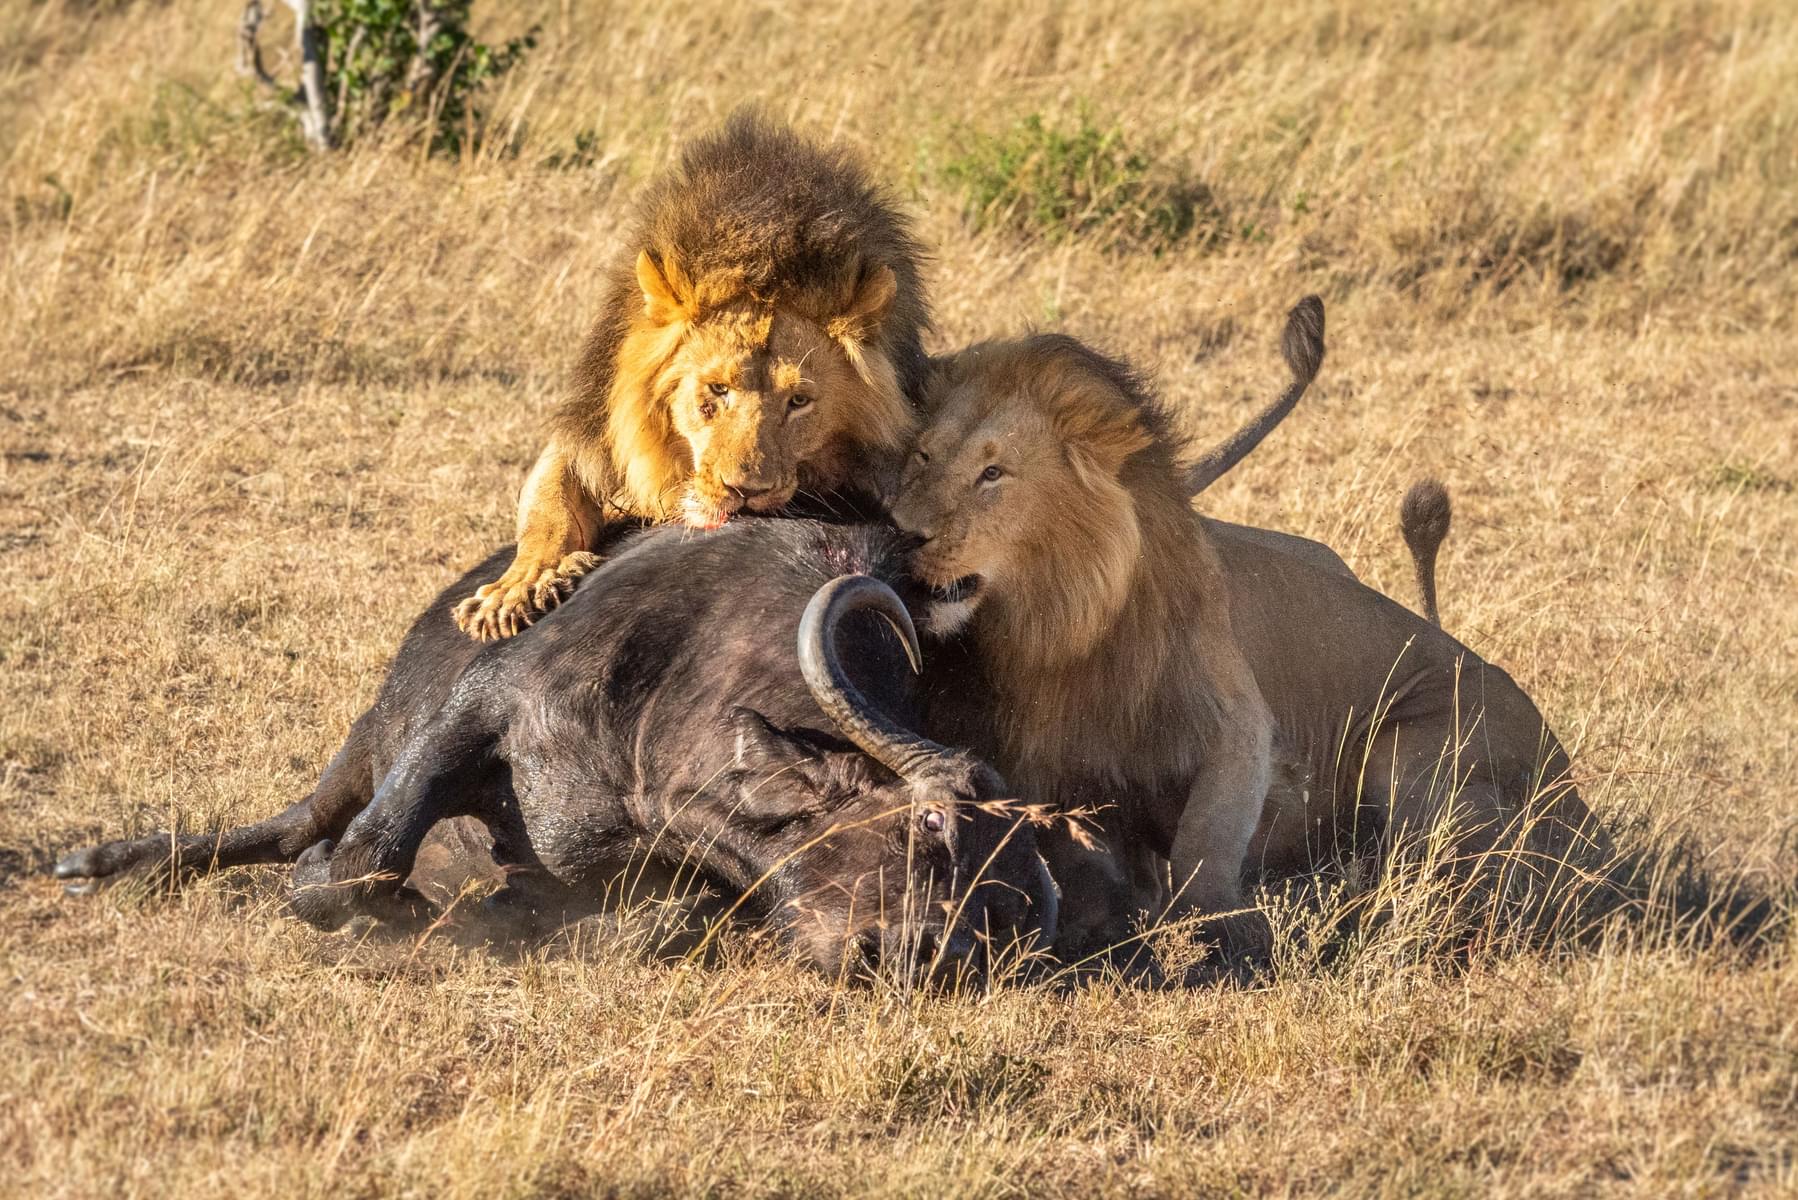 Safari Lion’s feeding